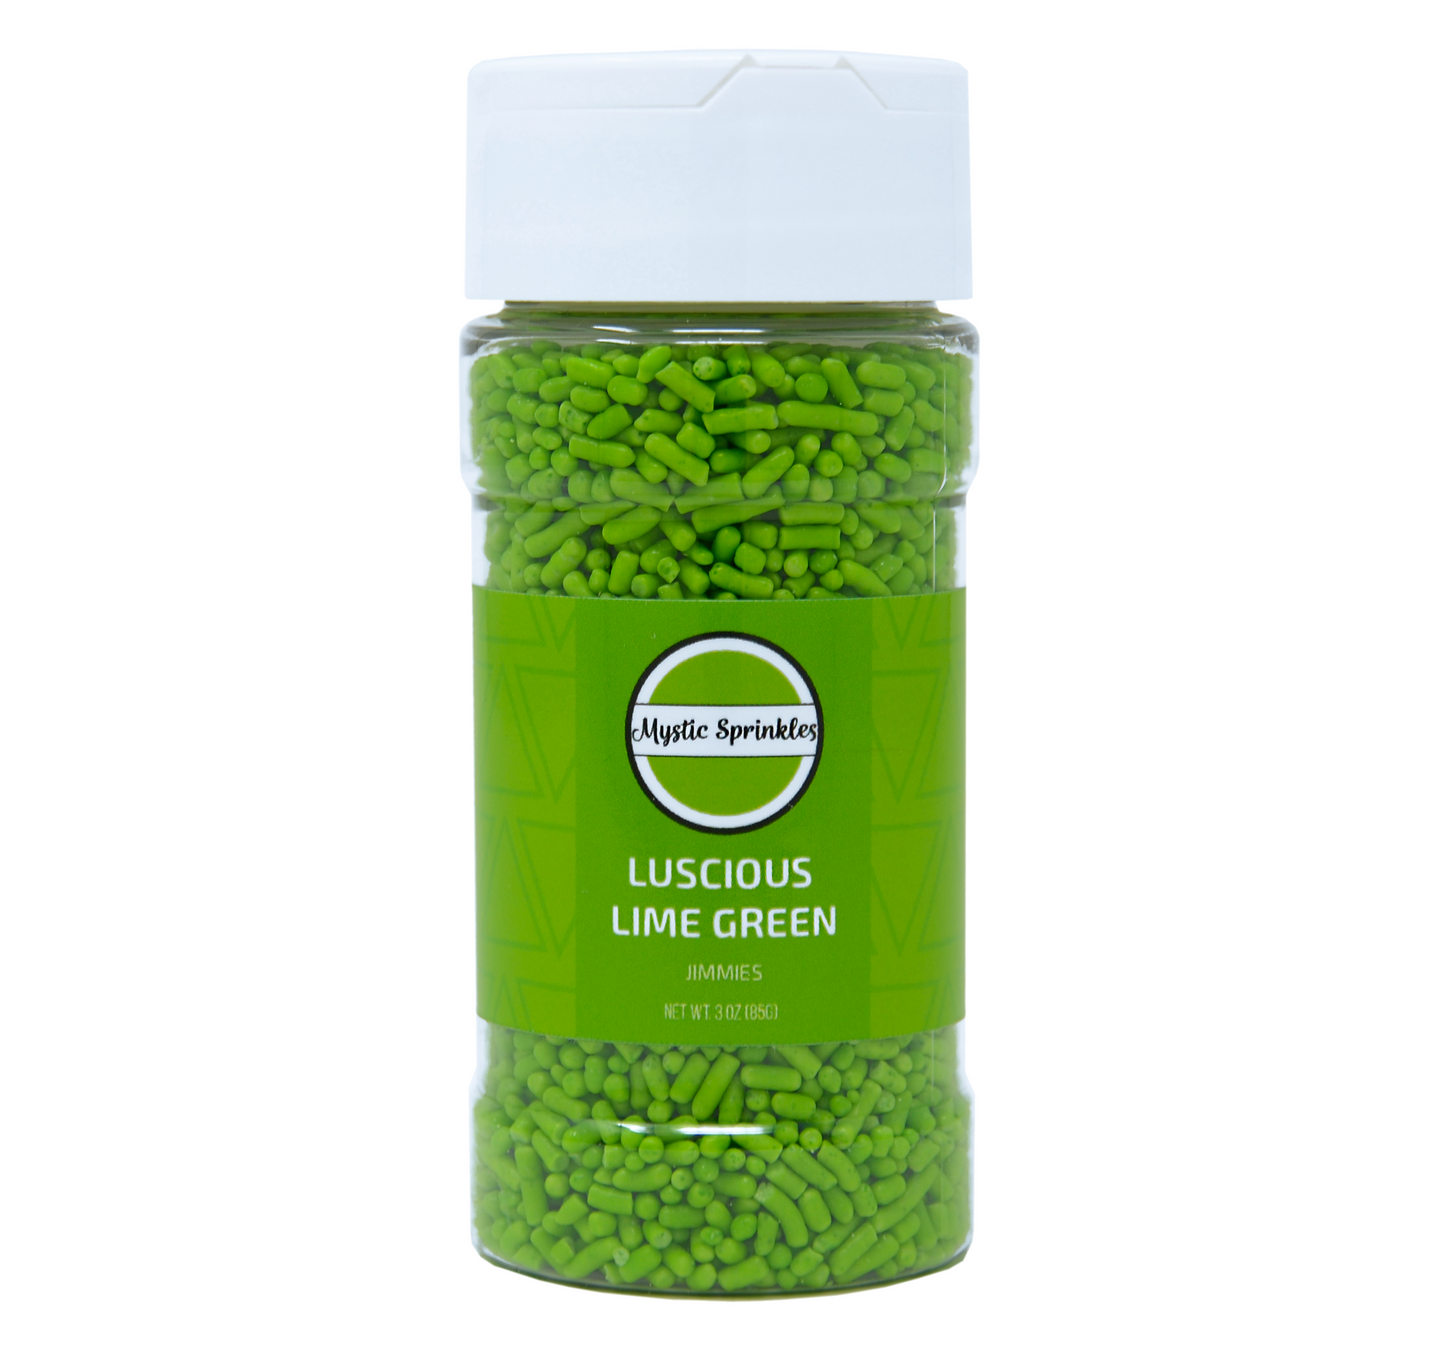 Luscious Lime Green Jimmies Sprinkles 3oz Bottle